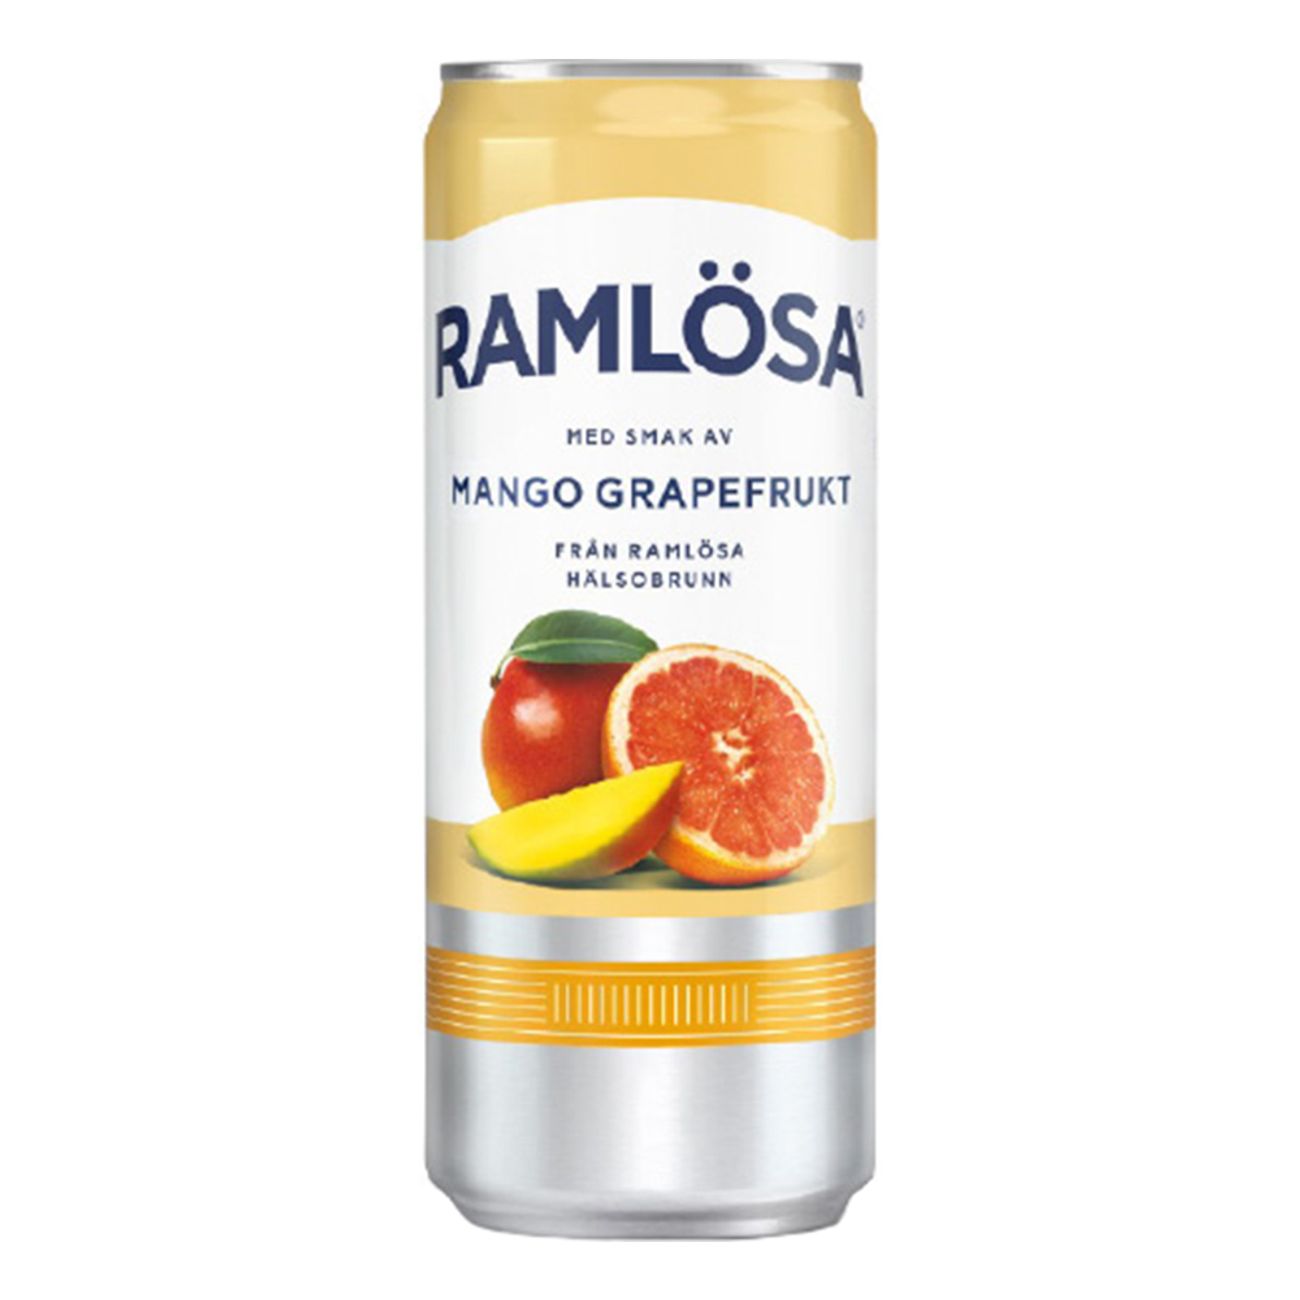 ramlosa-mango-grapefrukt-100879-1